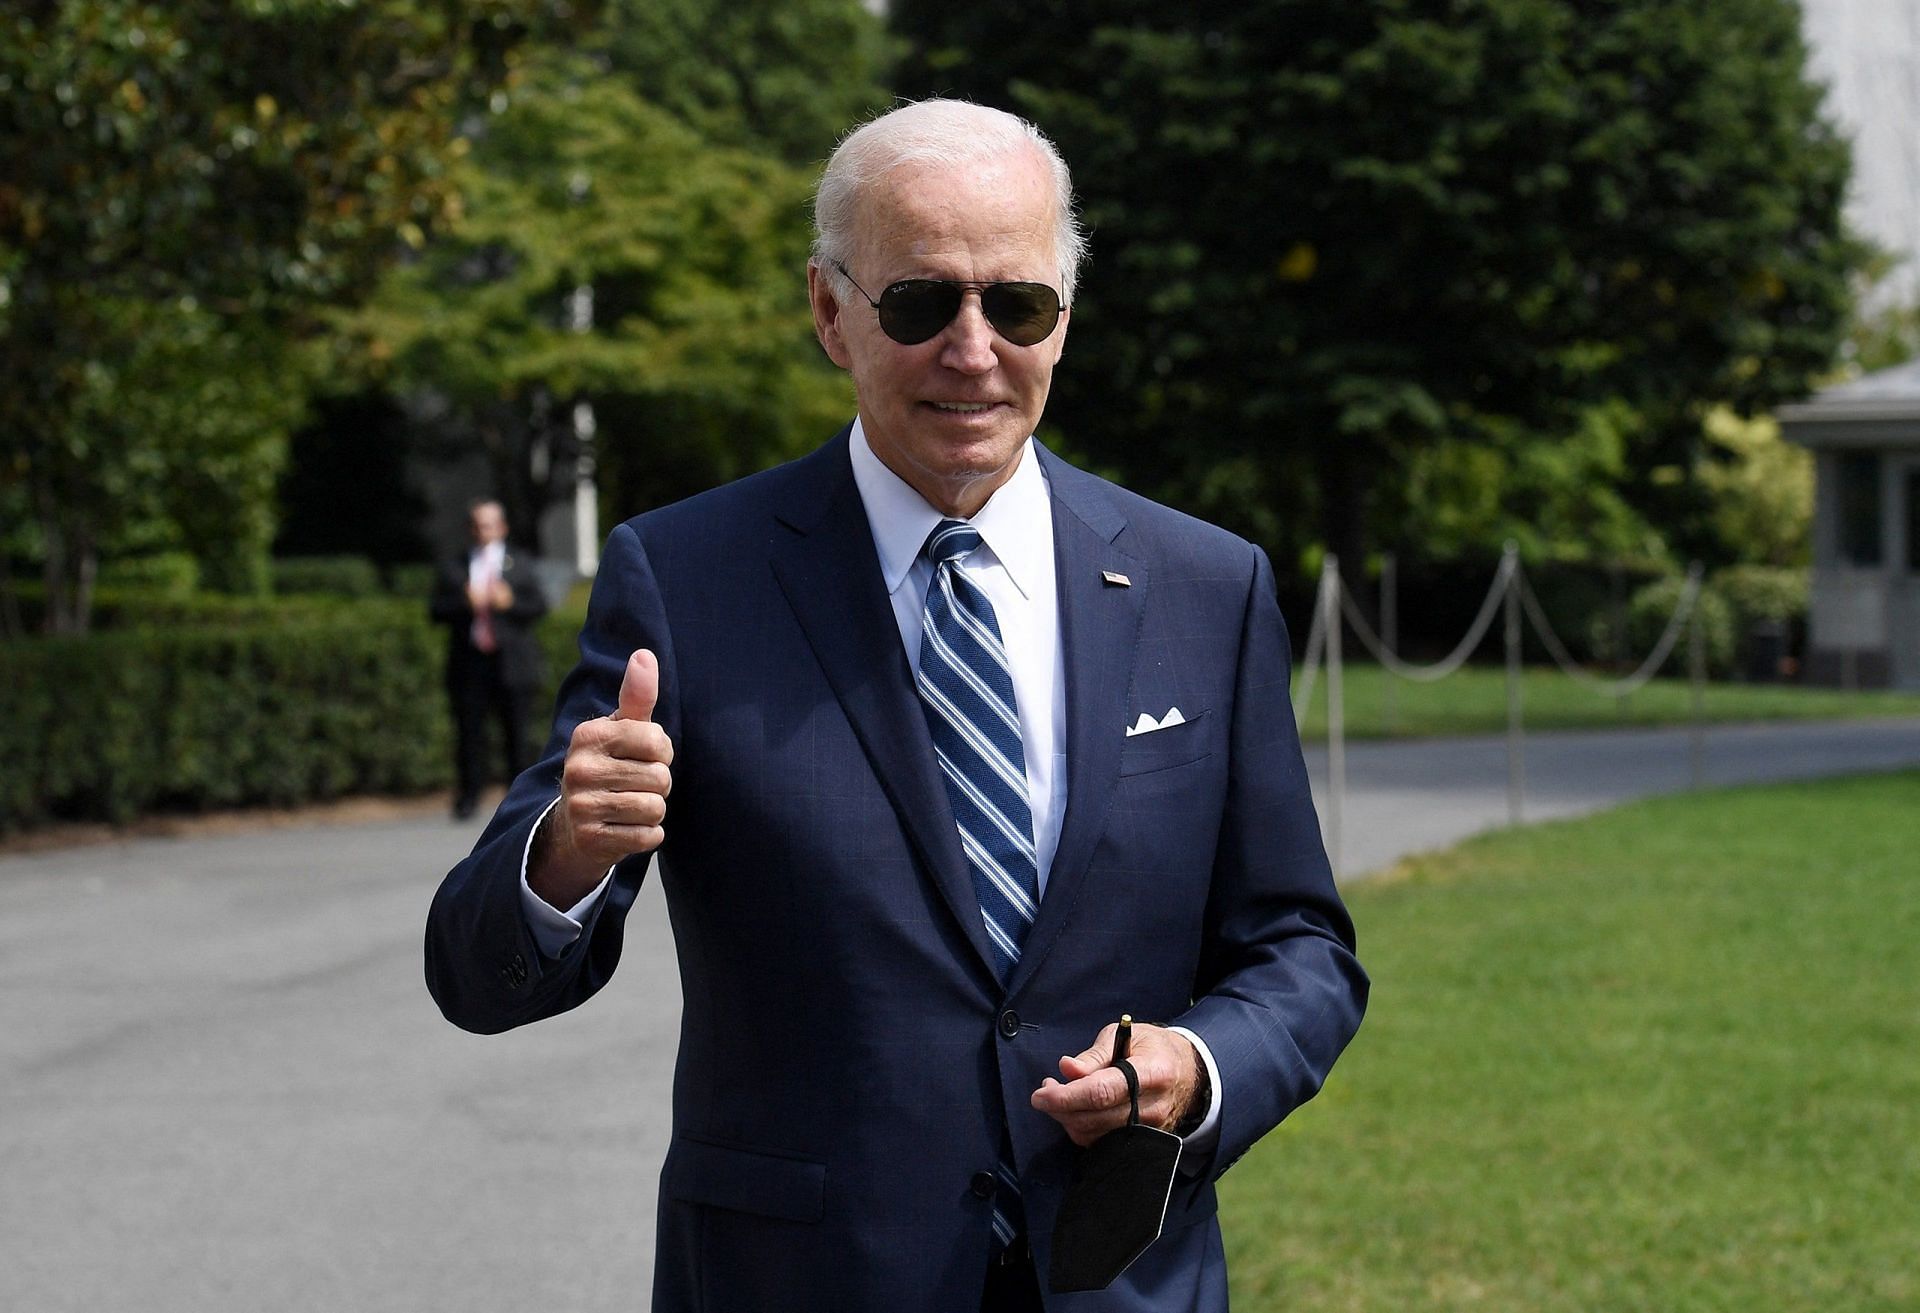 Viral video claiming Joe Biden passed away debunked (Image via Getty Images)